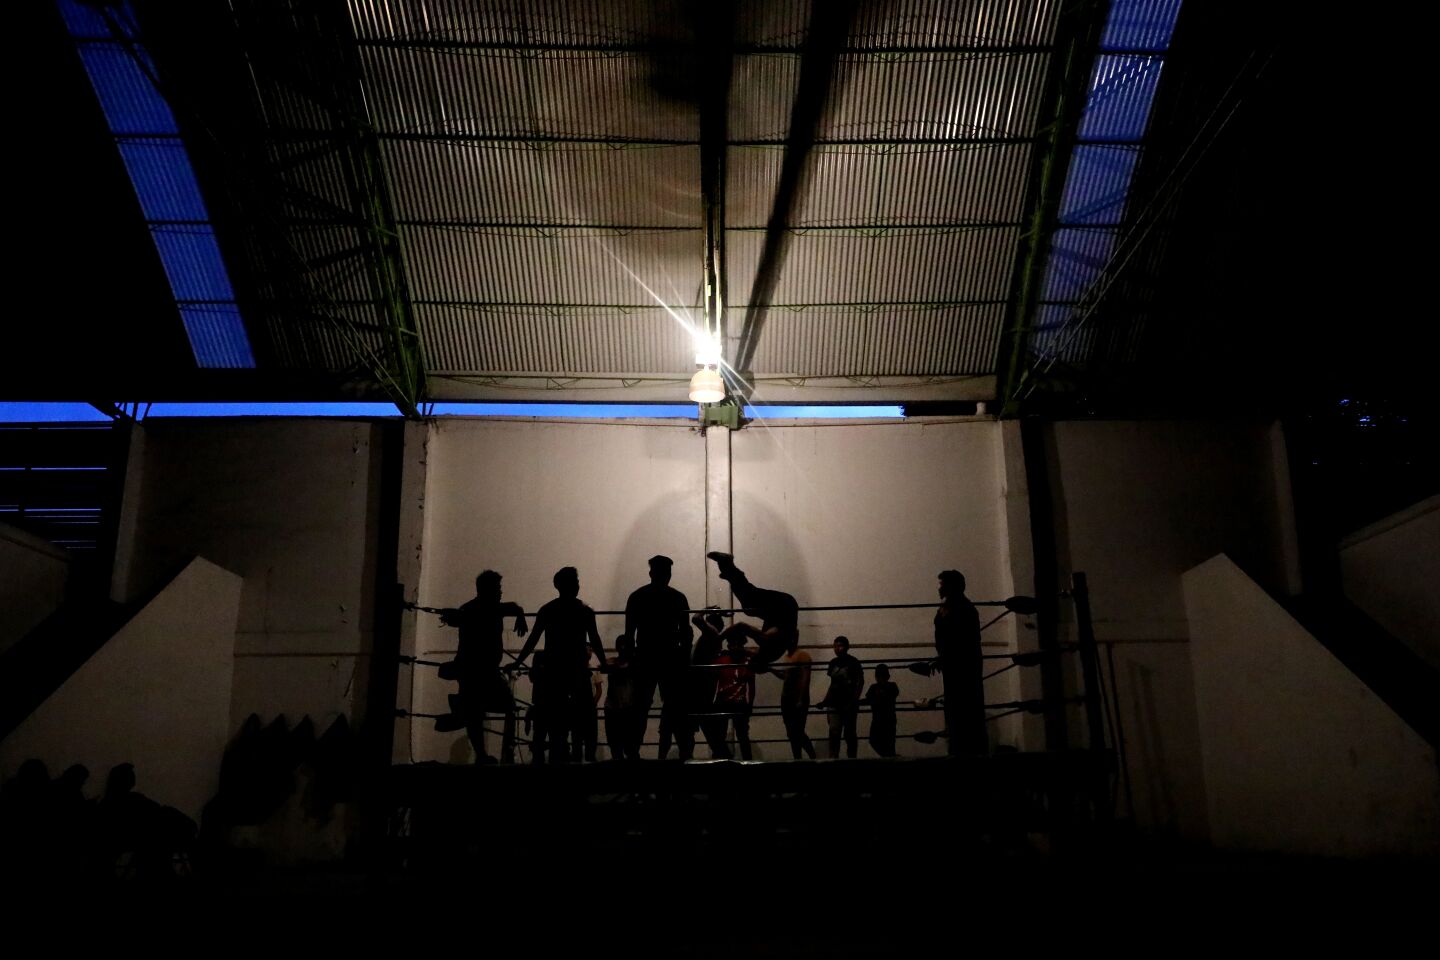 Wrestlers from the Escuela de Lucha Libre de Promociones Corsario Negro train at the Centro Civico in Ecatepec, Mexico.